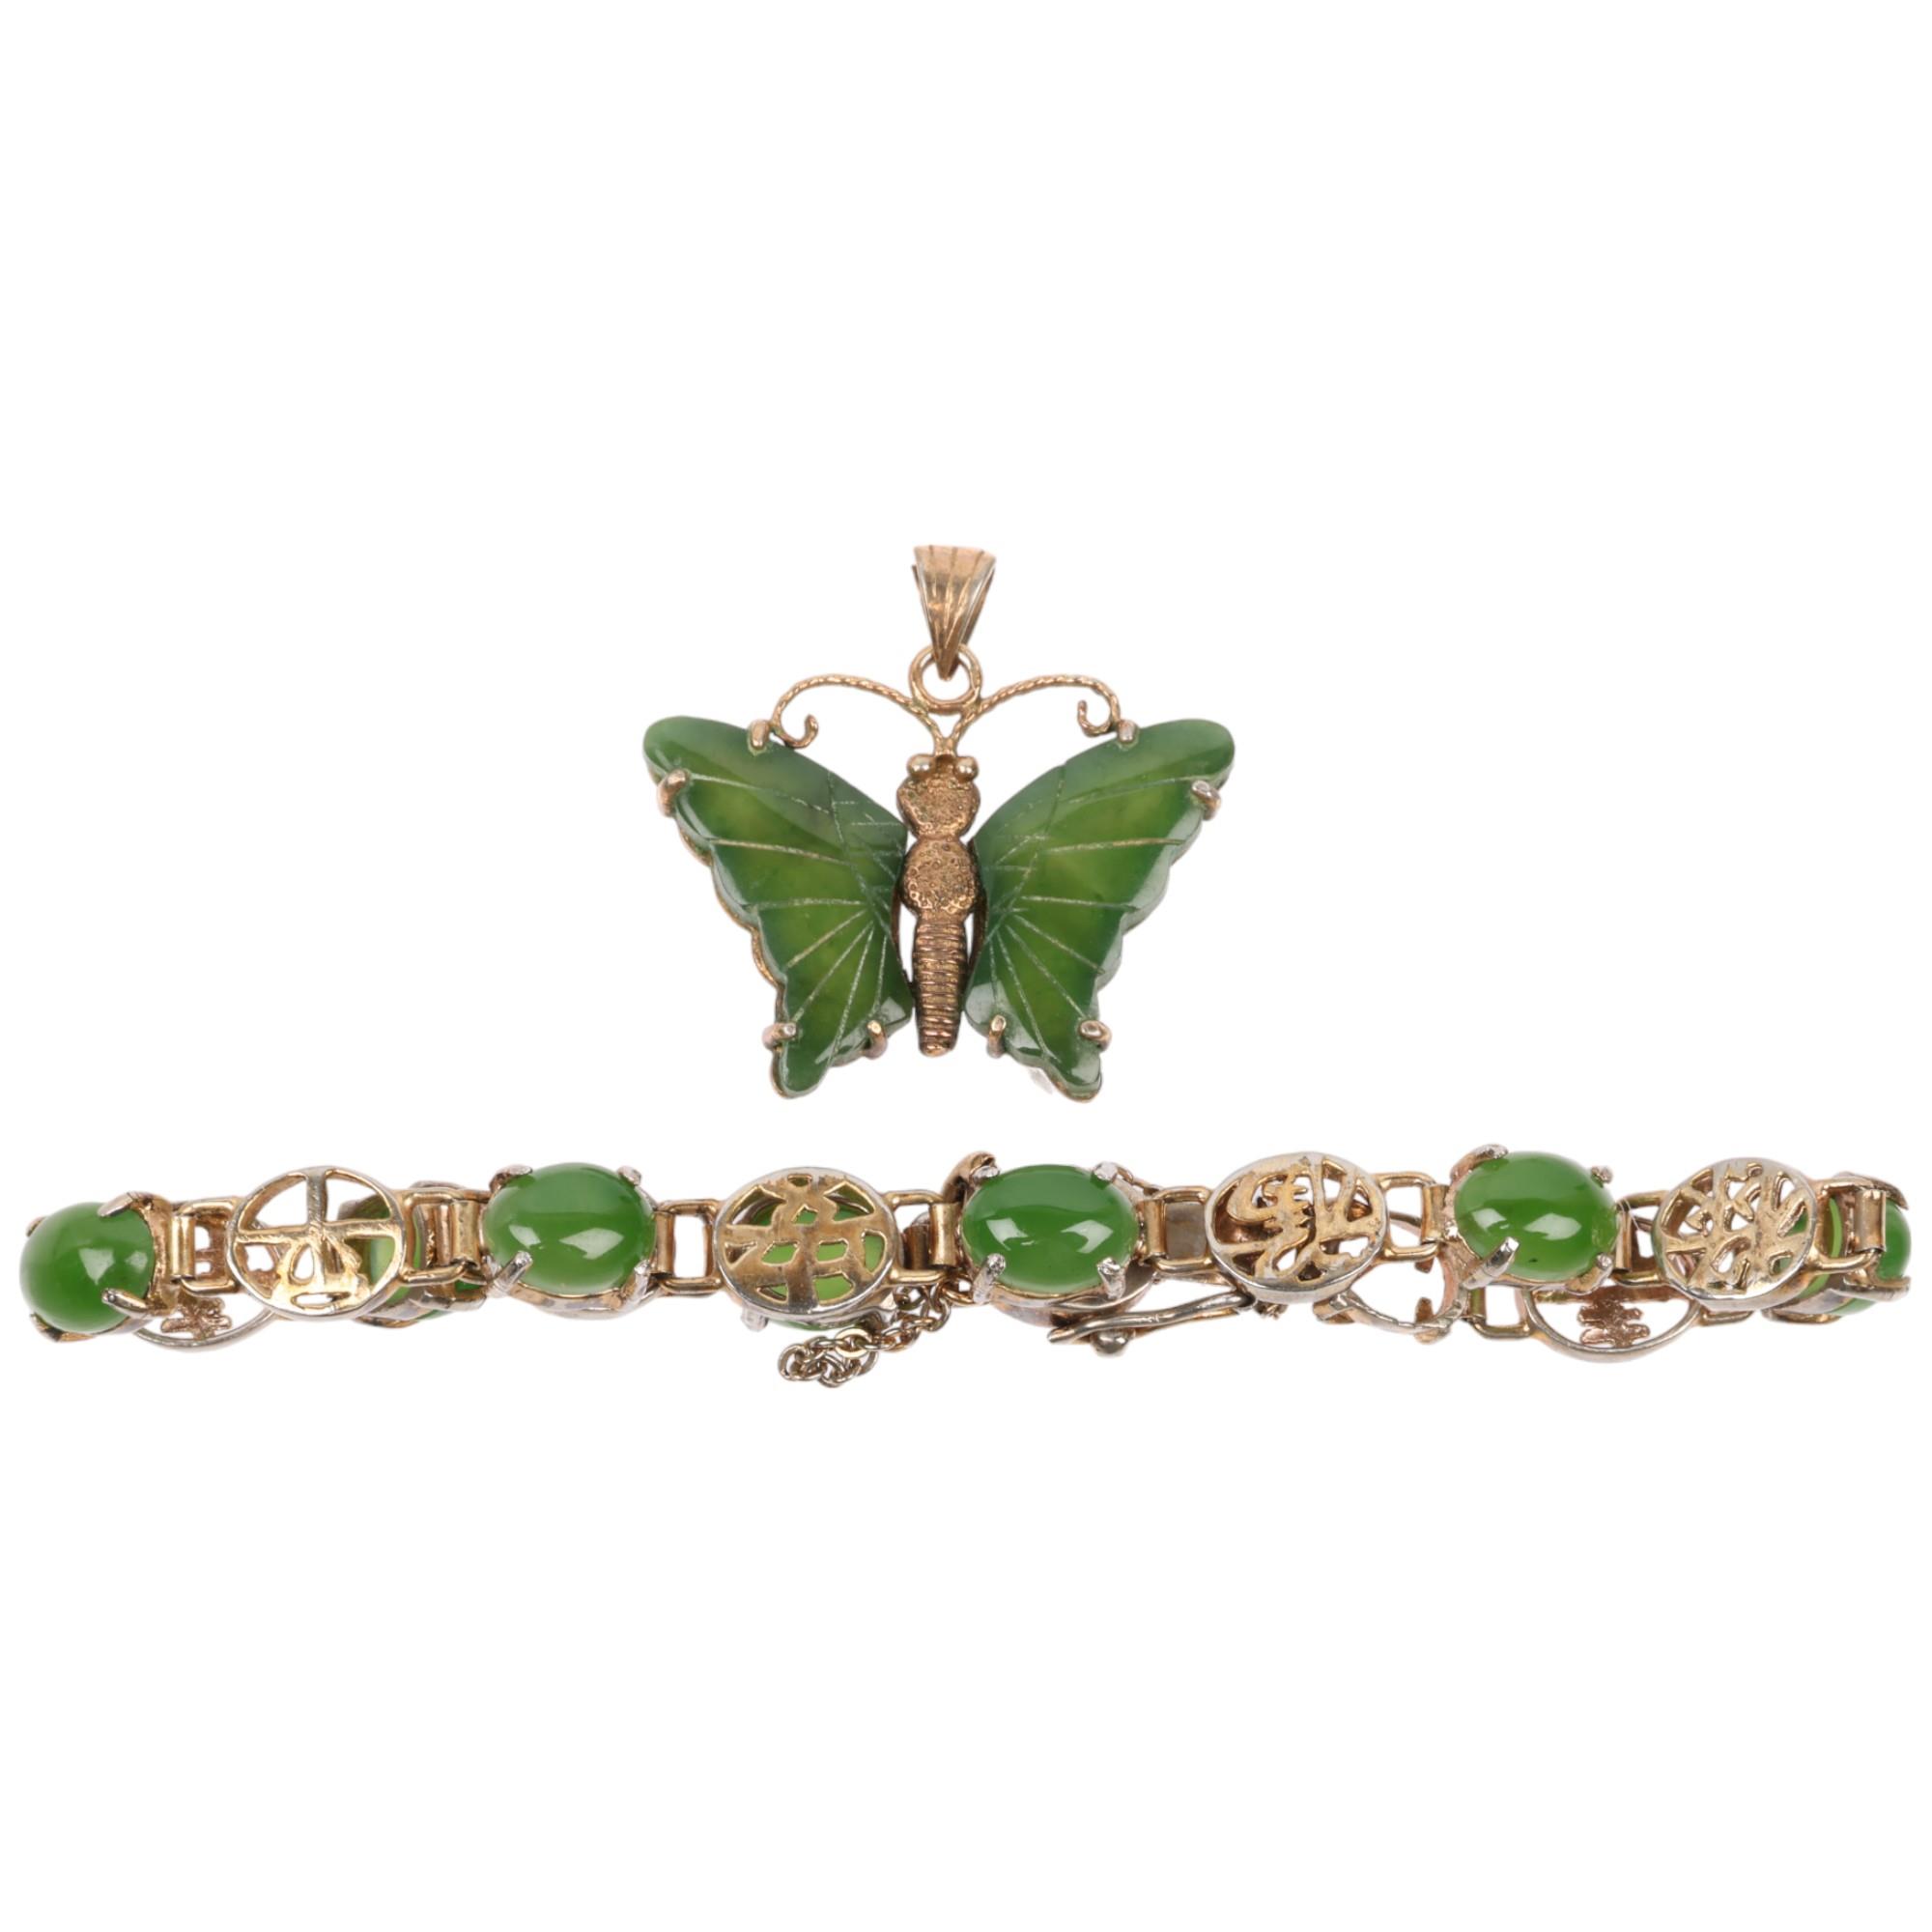 A Chinese silver-gilt jadeite panel bracelet and butterfly pendant, bracelet 17cm, pendant 26.5mm,